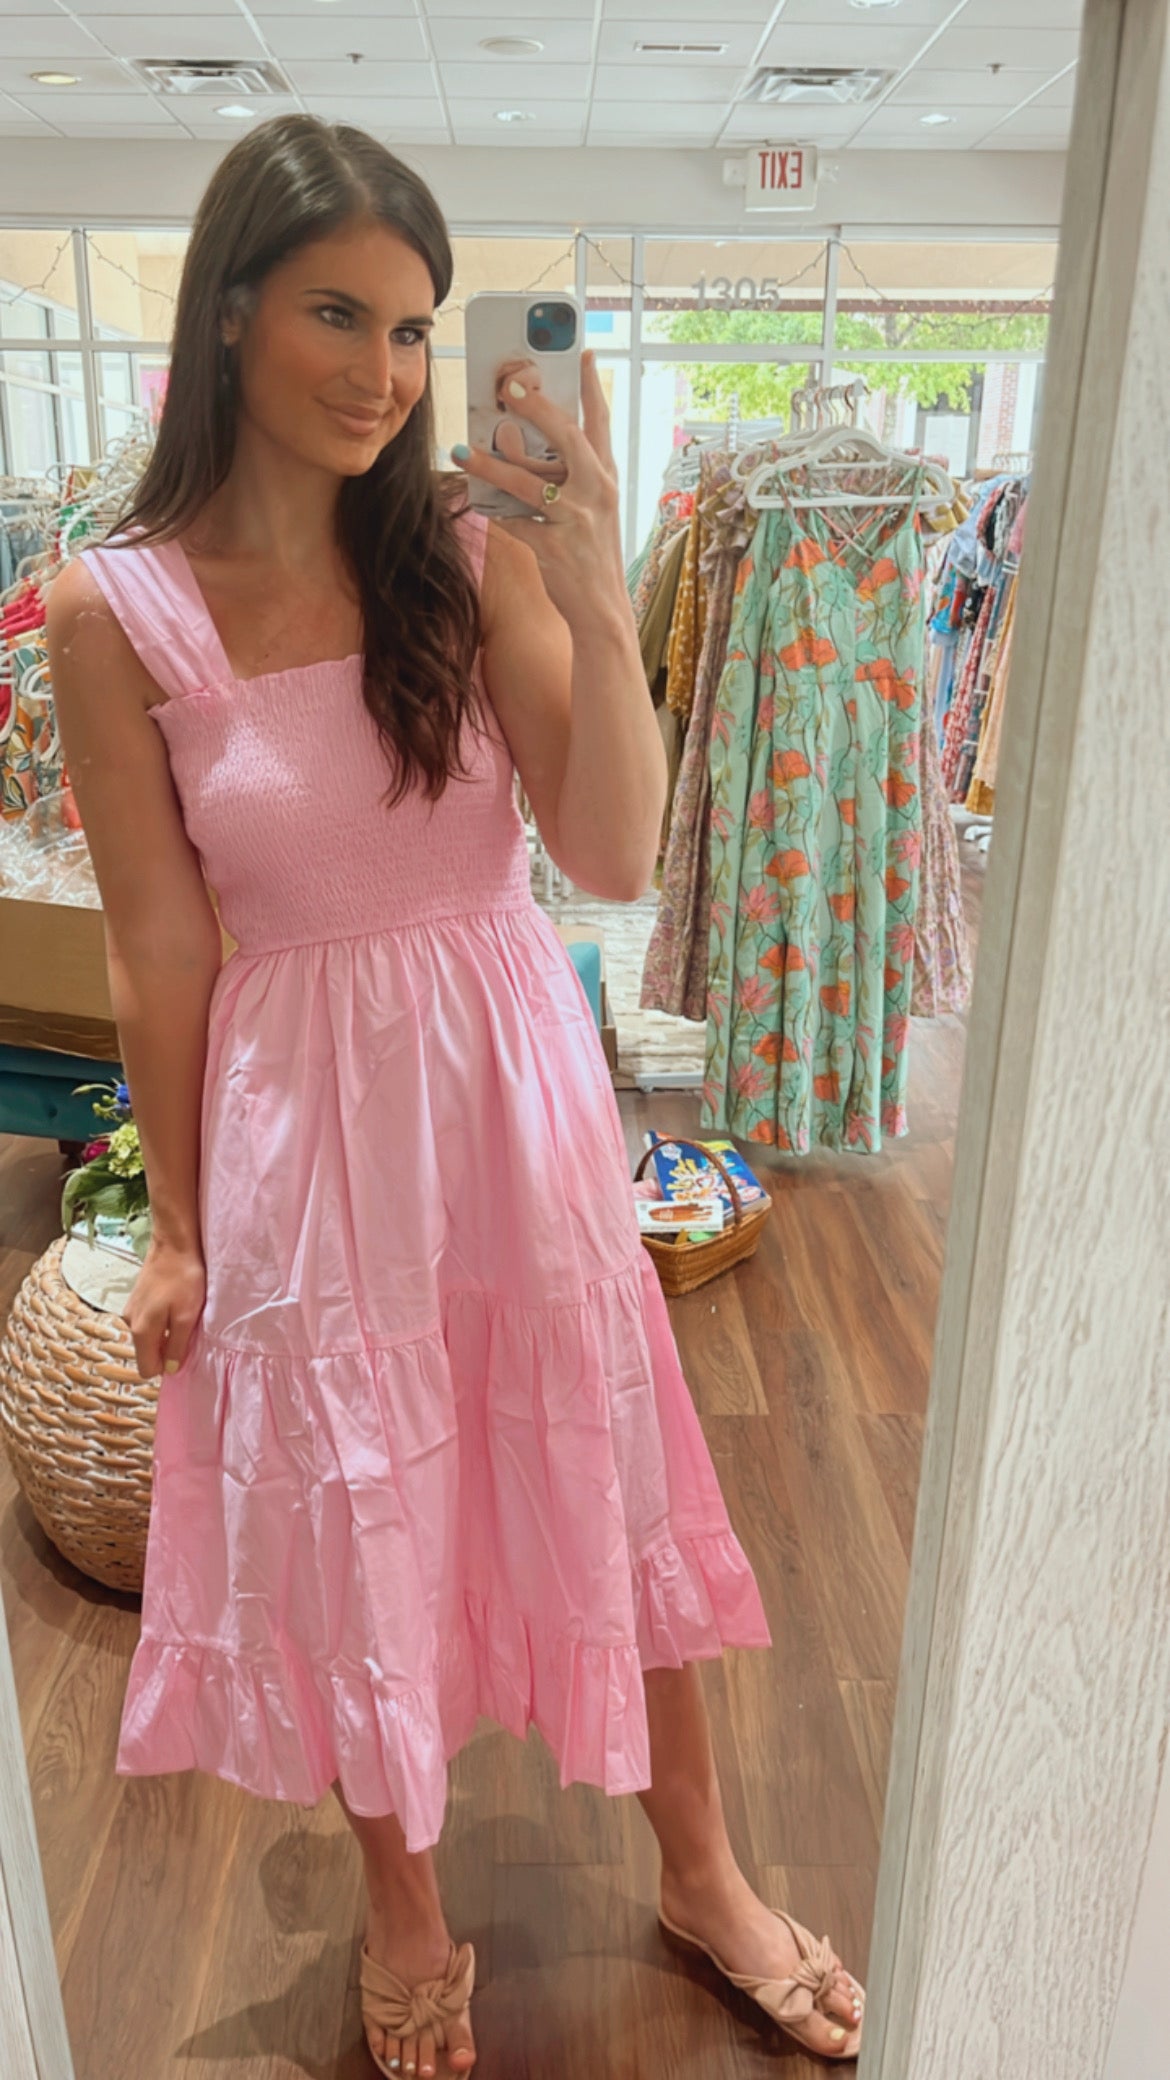 Preciously Pink Dress